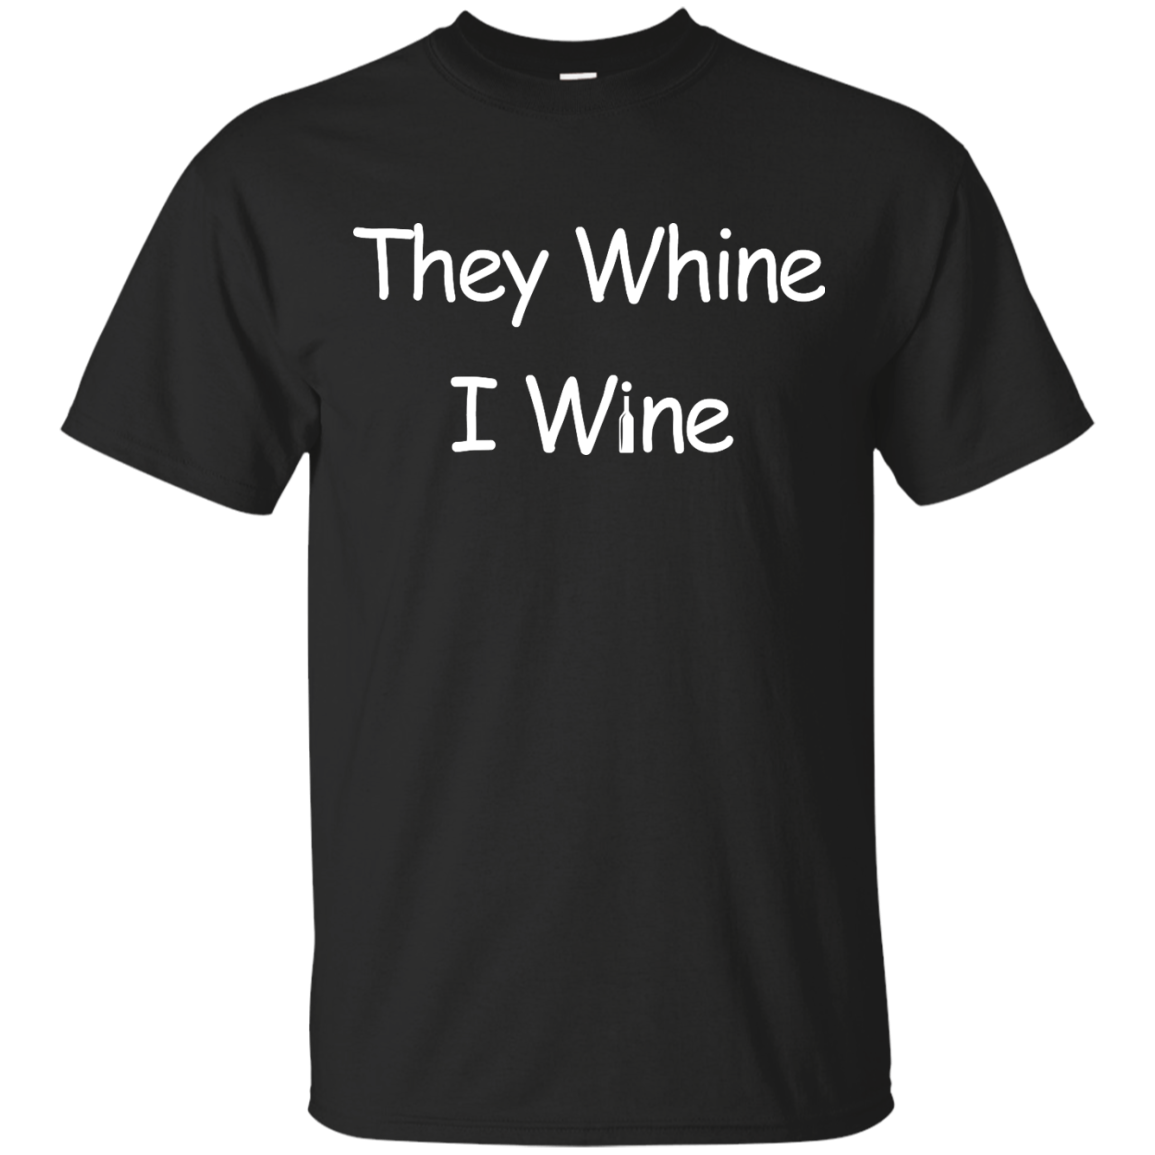 They whine I wine t-shirt, hoodie